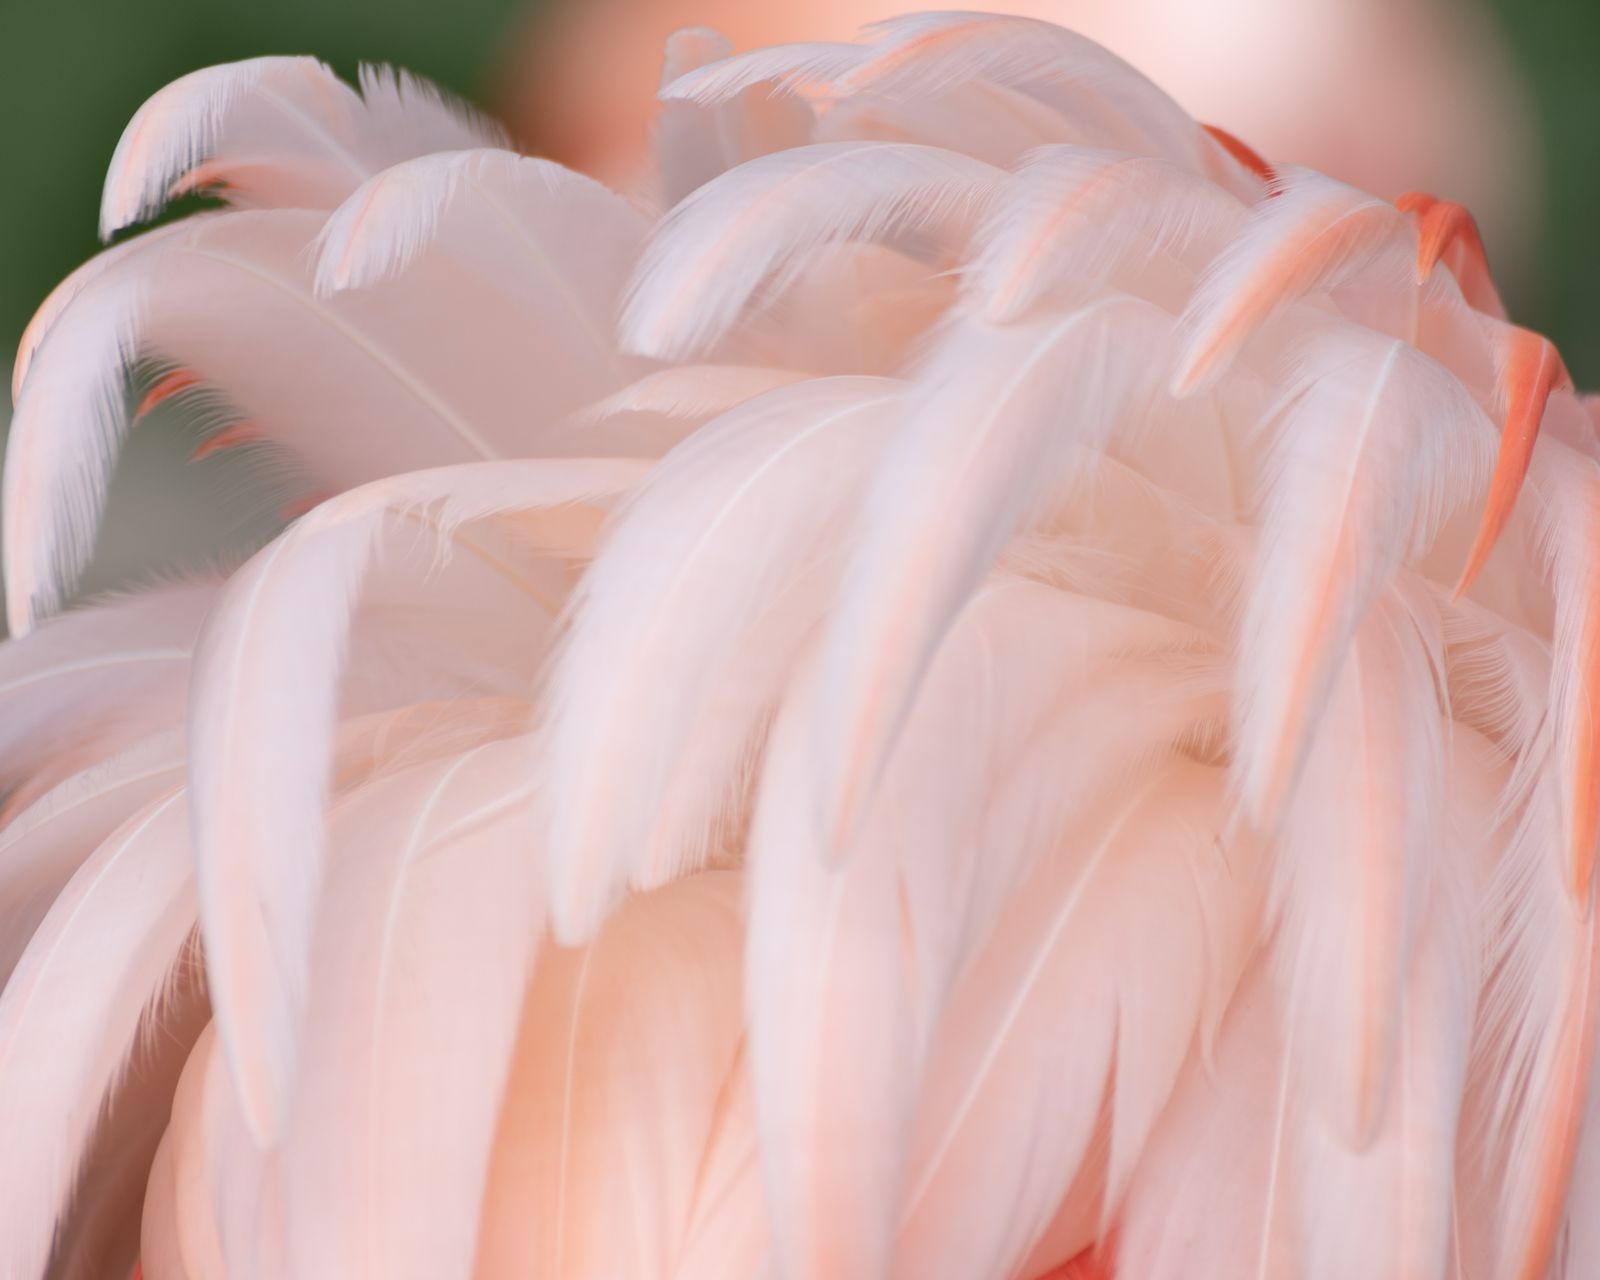 © Annalaura Cattelan - 13 - Chilean flamingo's feathers. (Parco Natura Viva, Bussolengo, VR)